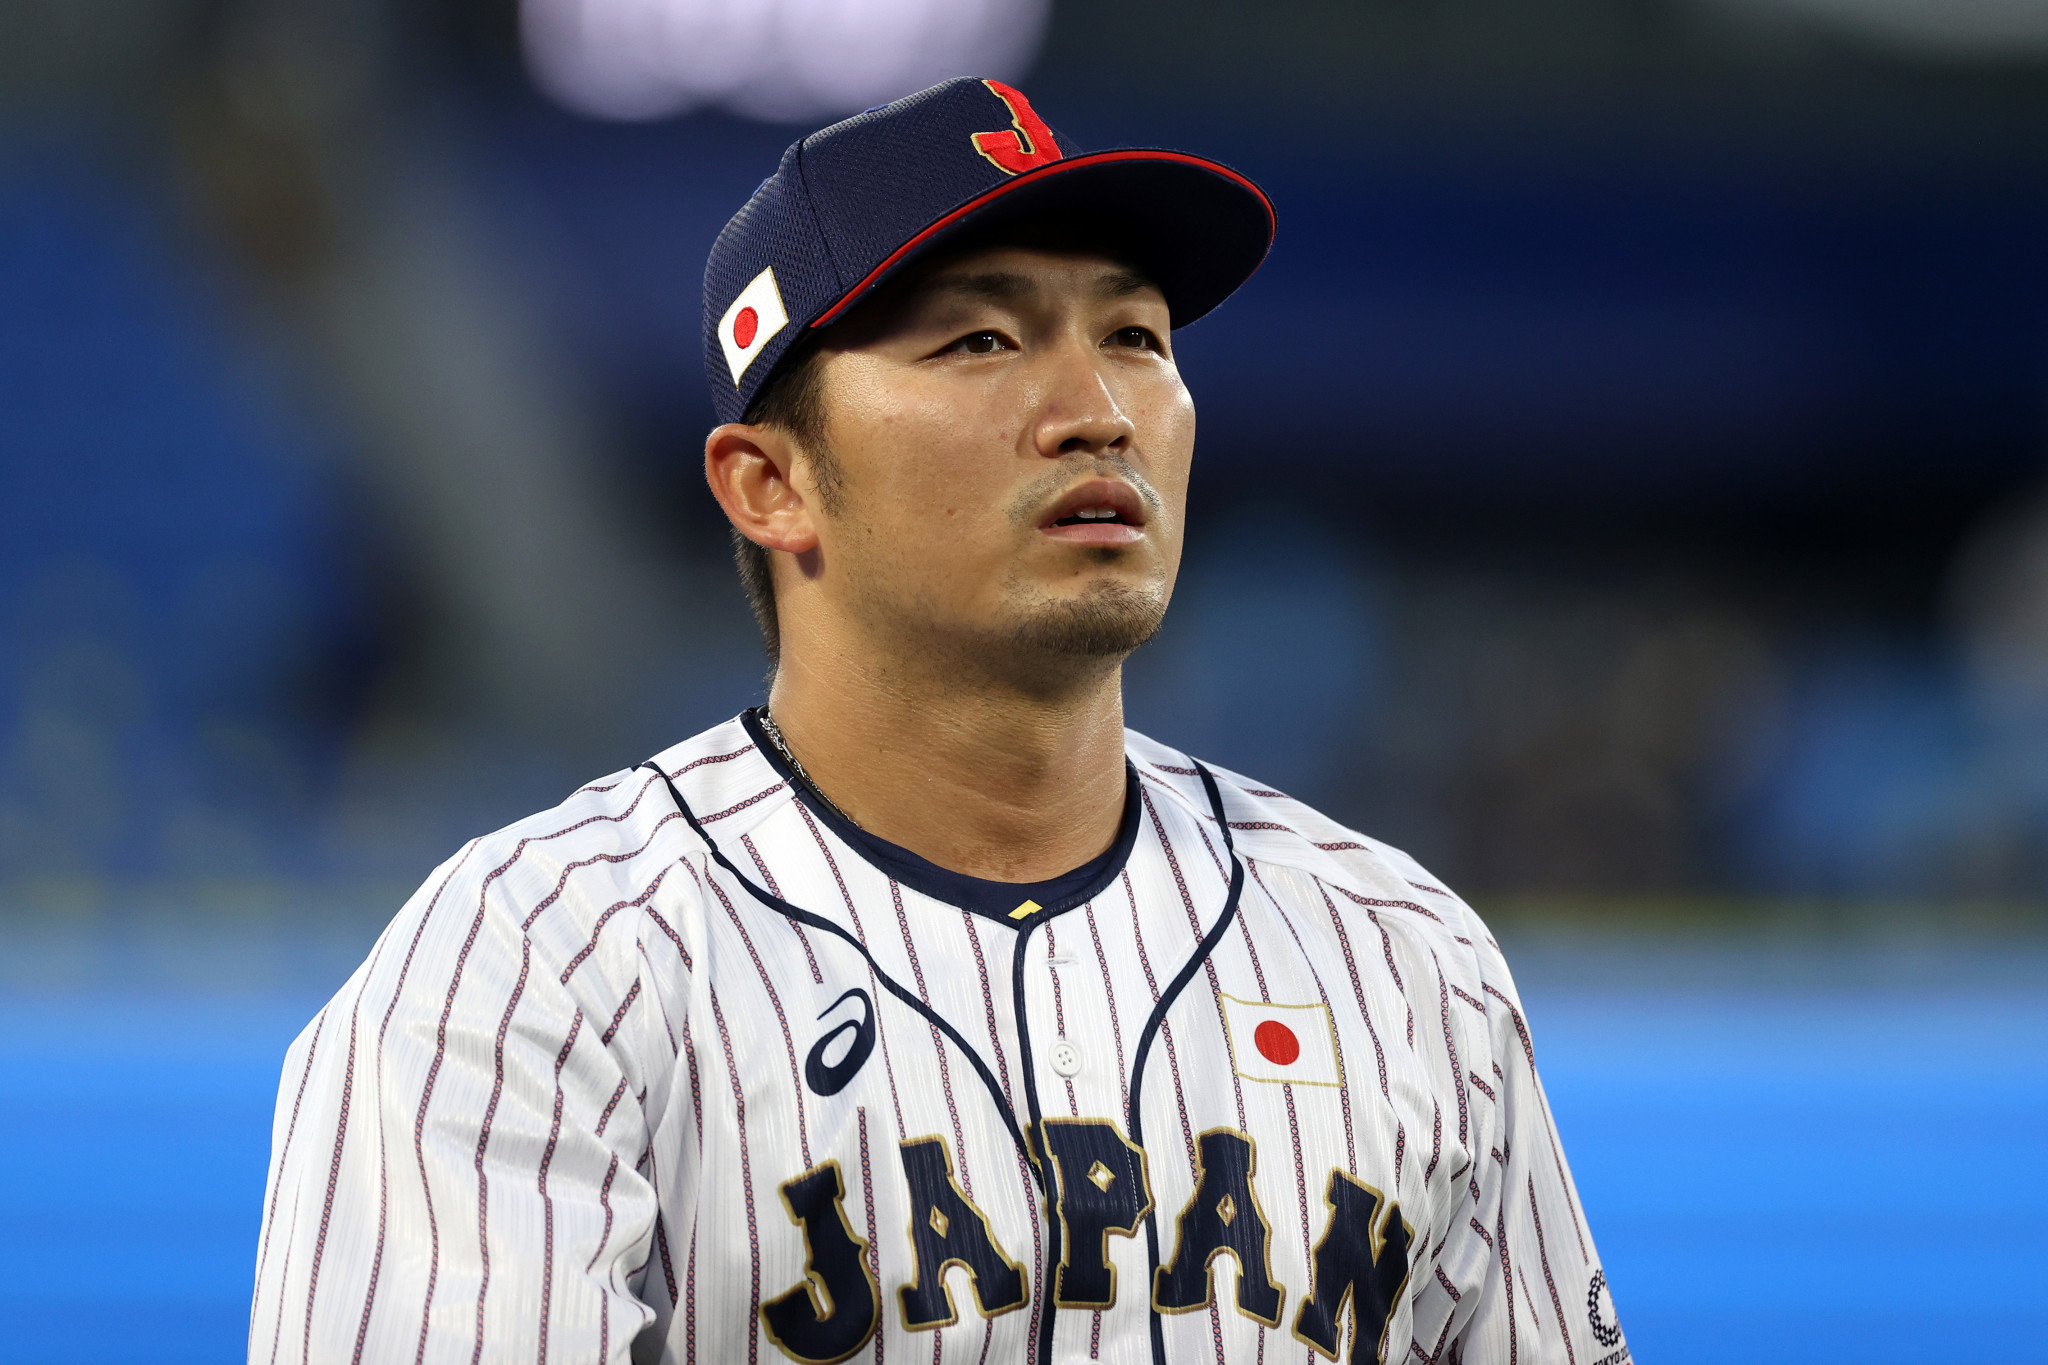 Tokyo 2020 gold medallist Suzuki to play for Japan in 2023 World Baseball Classic